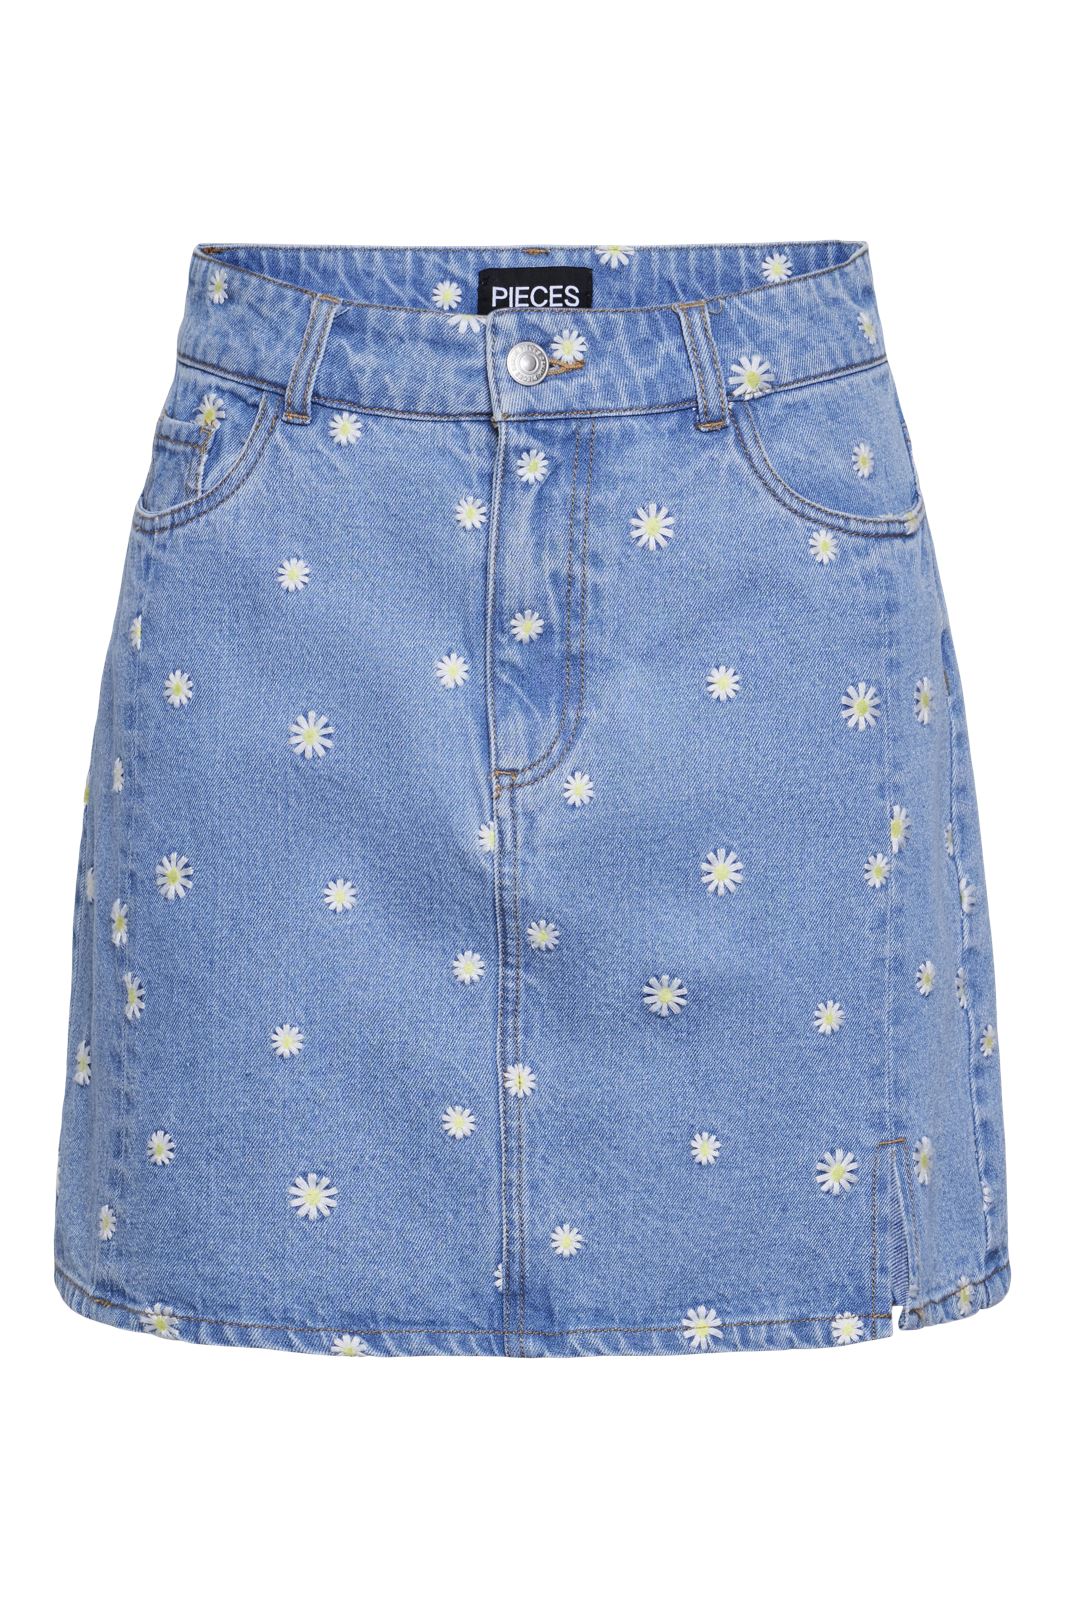 Pieces - Pcmay Short Denim Skirt - 4574938 Medium Blue Denim Emb Flowers